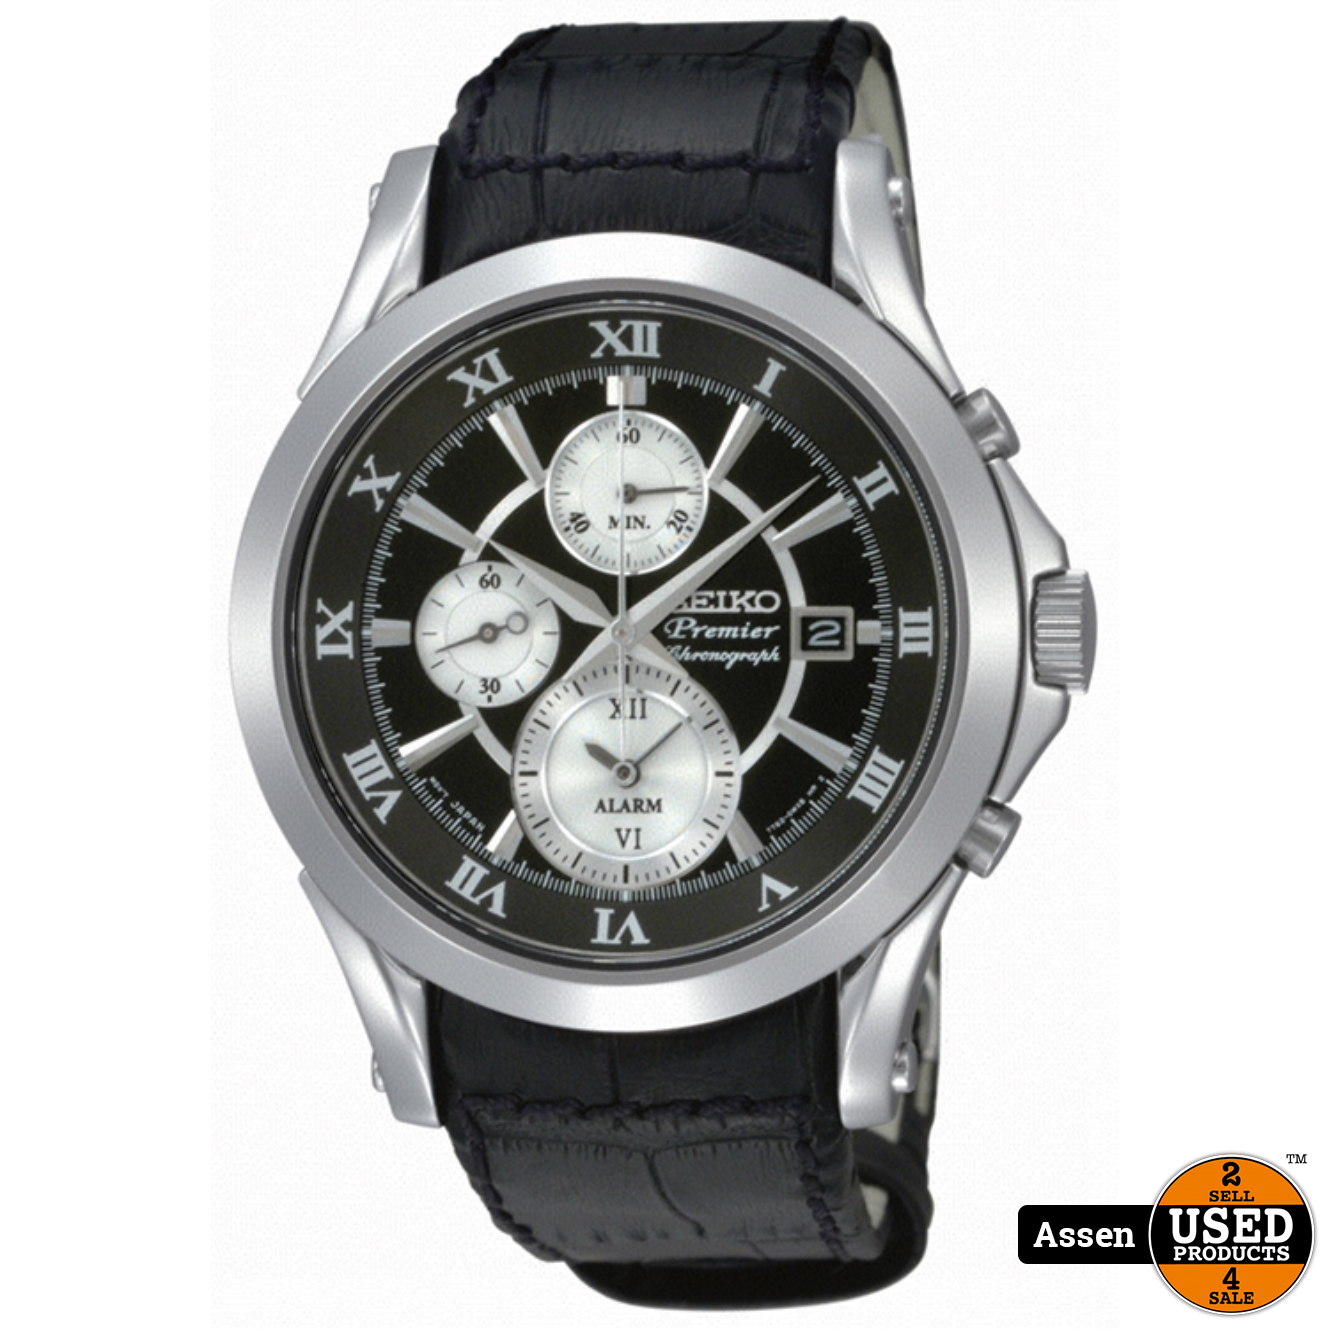 Premier Chronograph Heren Horloge - Used Products Assen